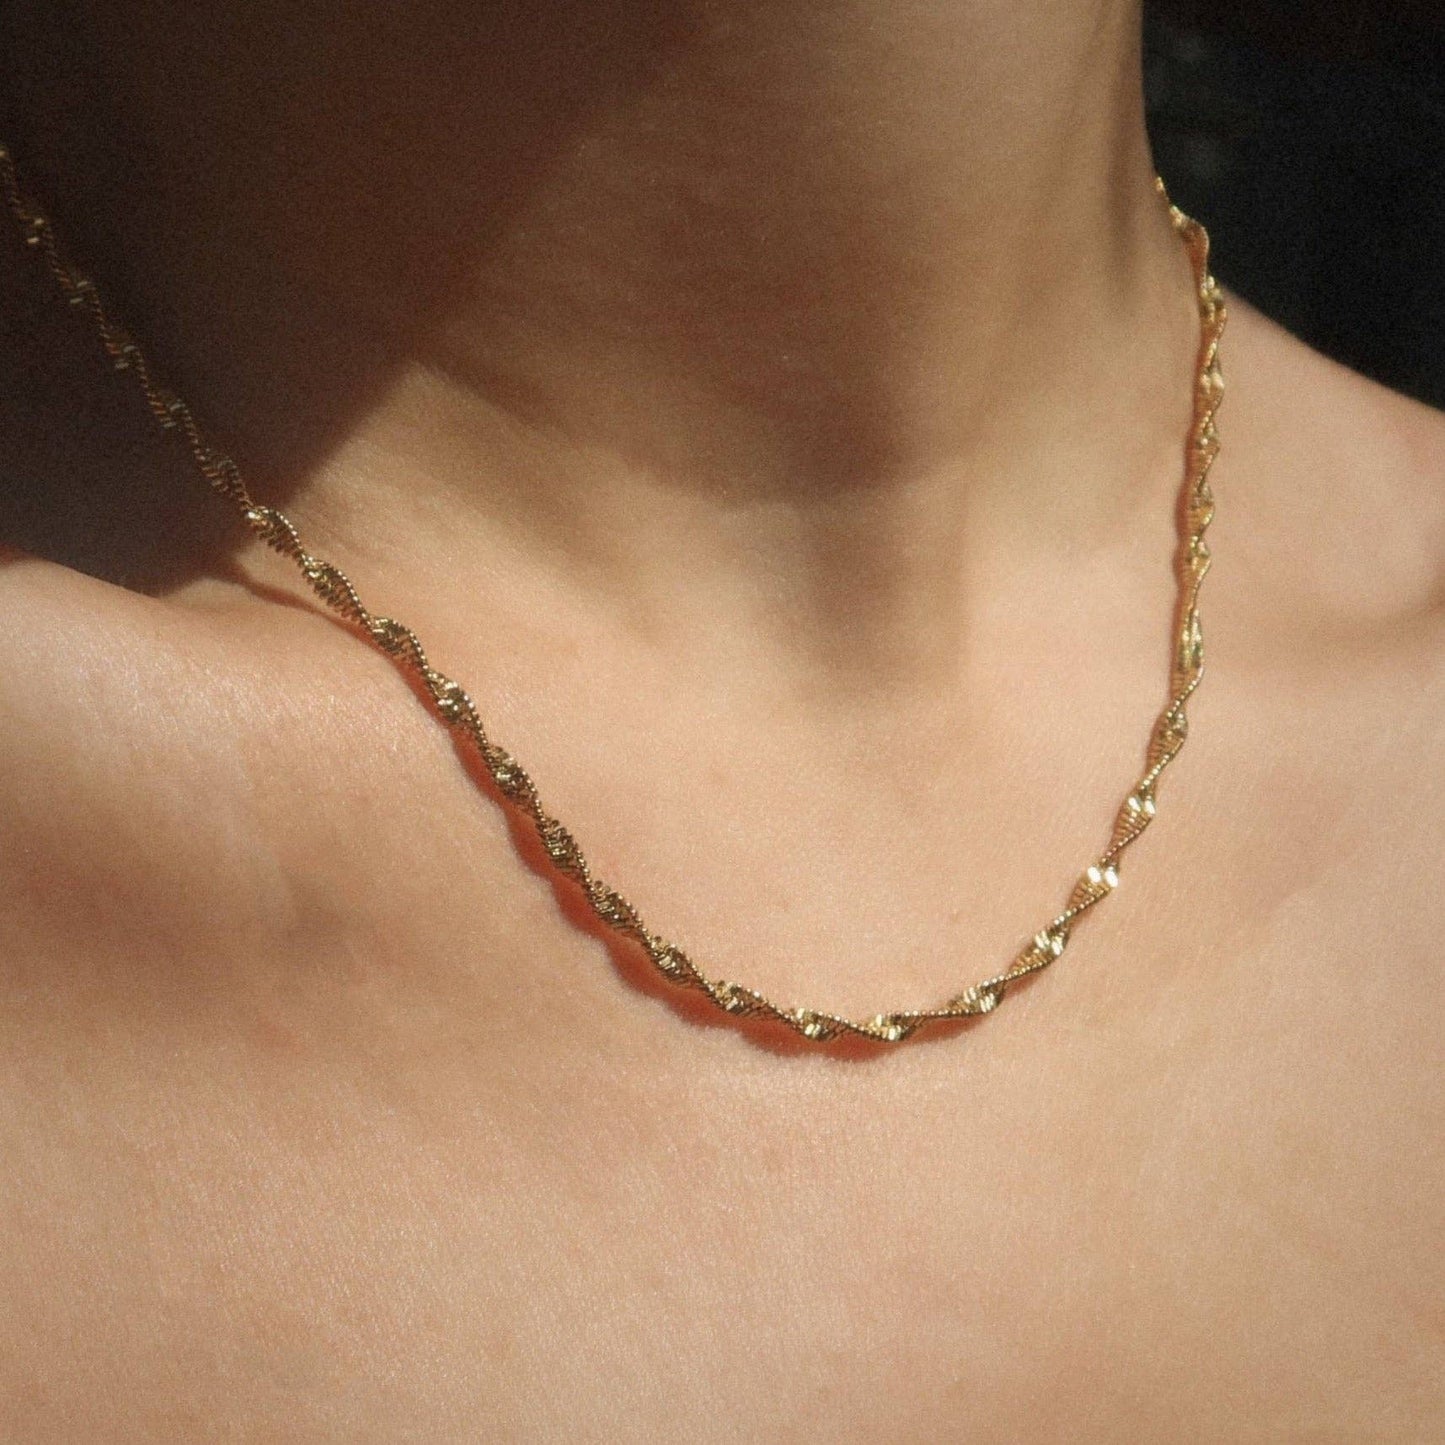 Mod + Jo - Brooke Chain Necklace